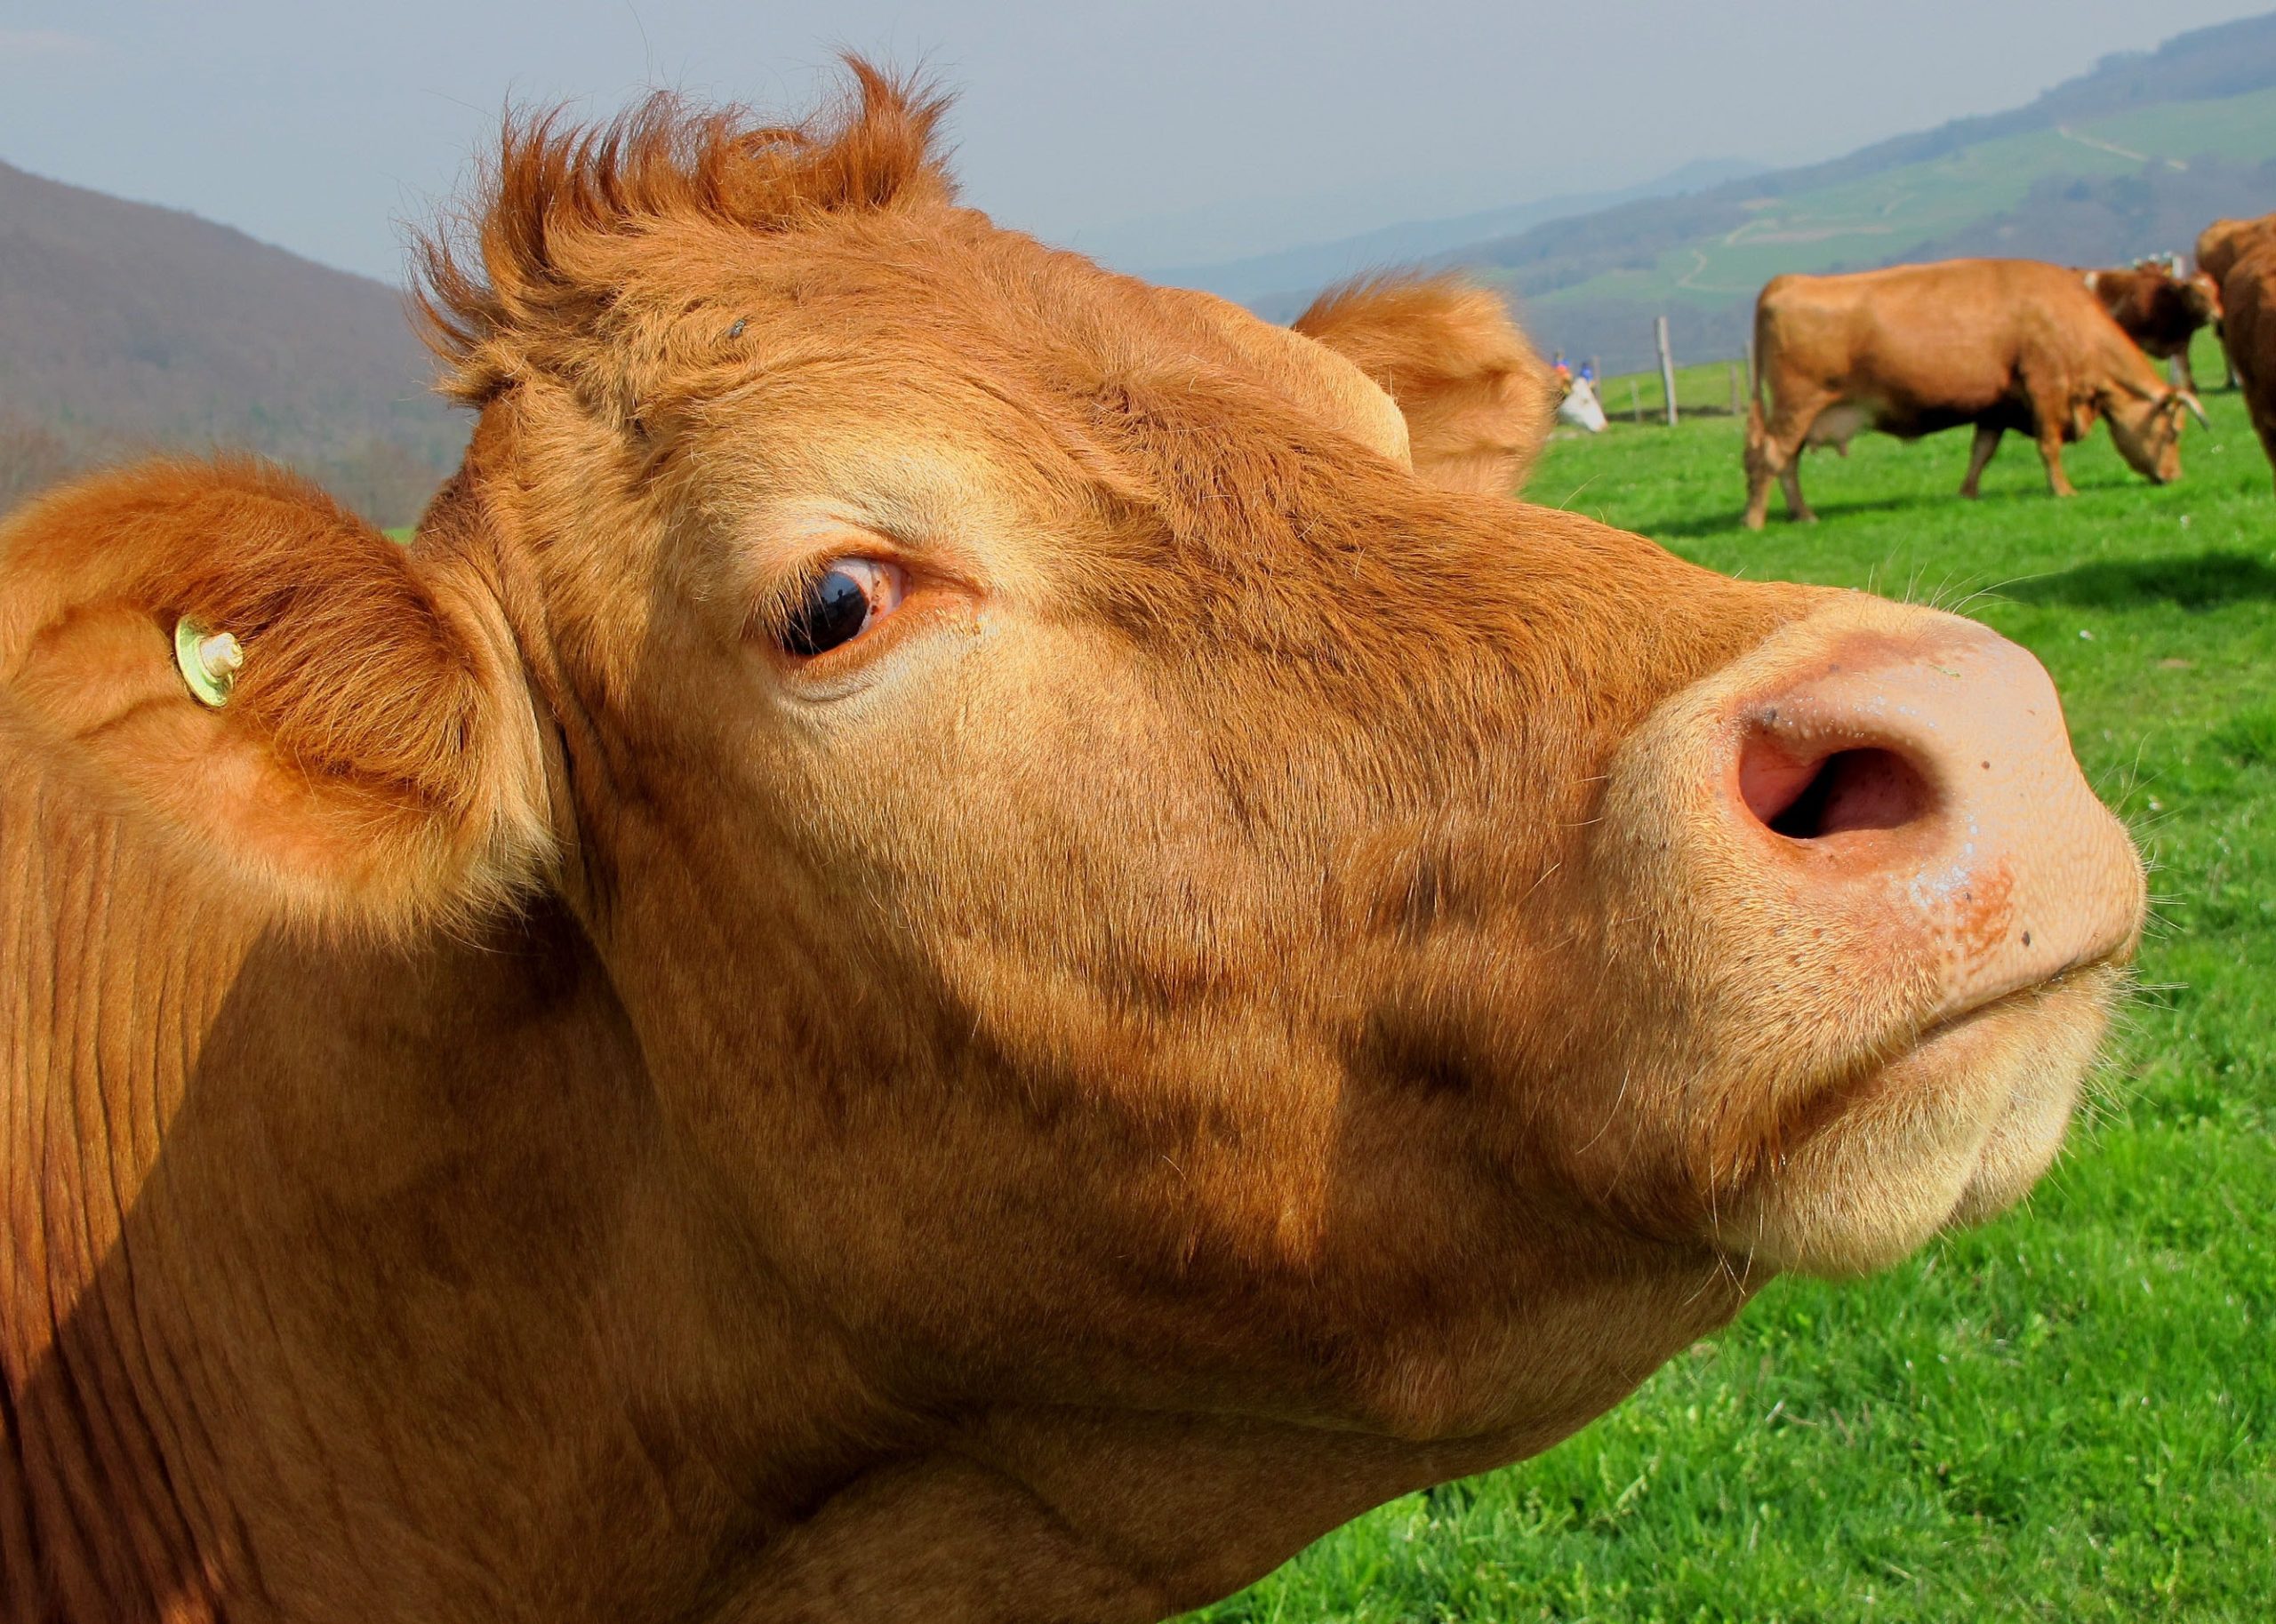 Cow attack compensation claim